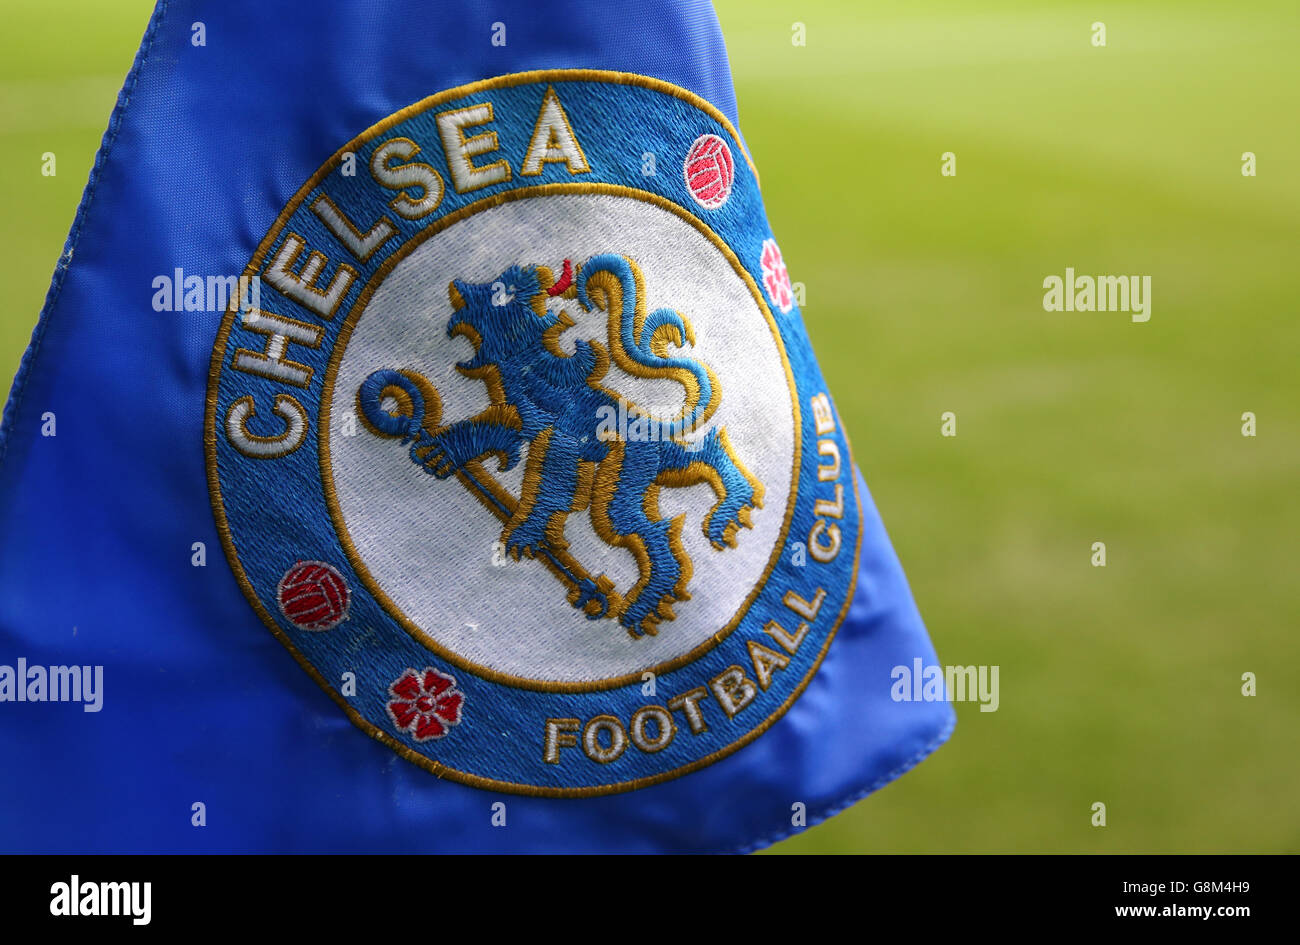 Chelsea V Manchester United - Barclays Premier League - Stamford Bridge Stockfoto